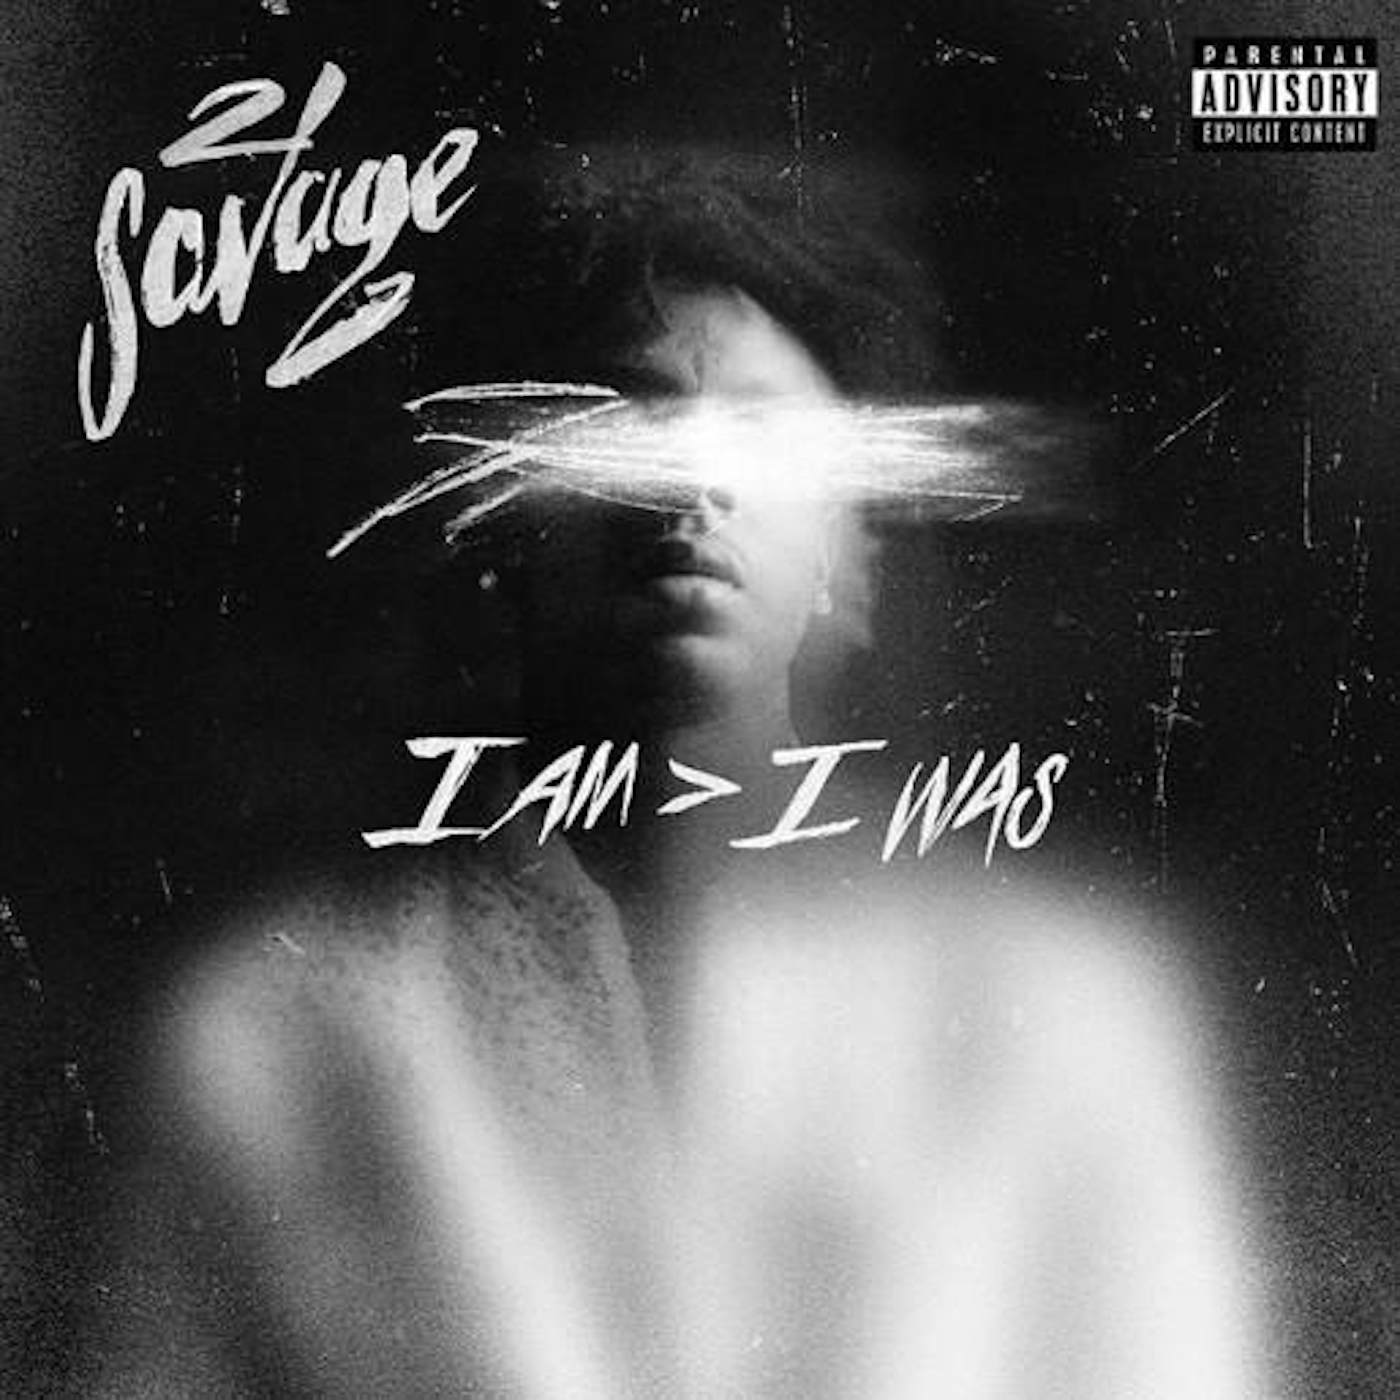 21 Savage I AM > I WAS CD